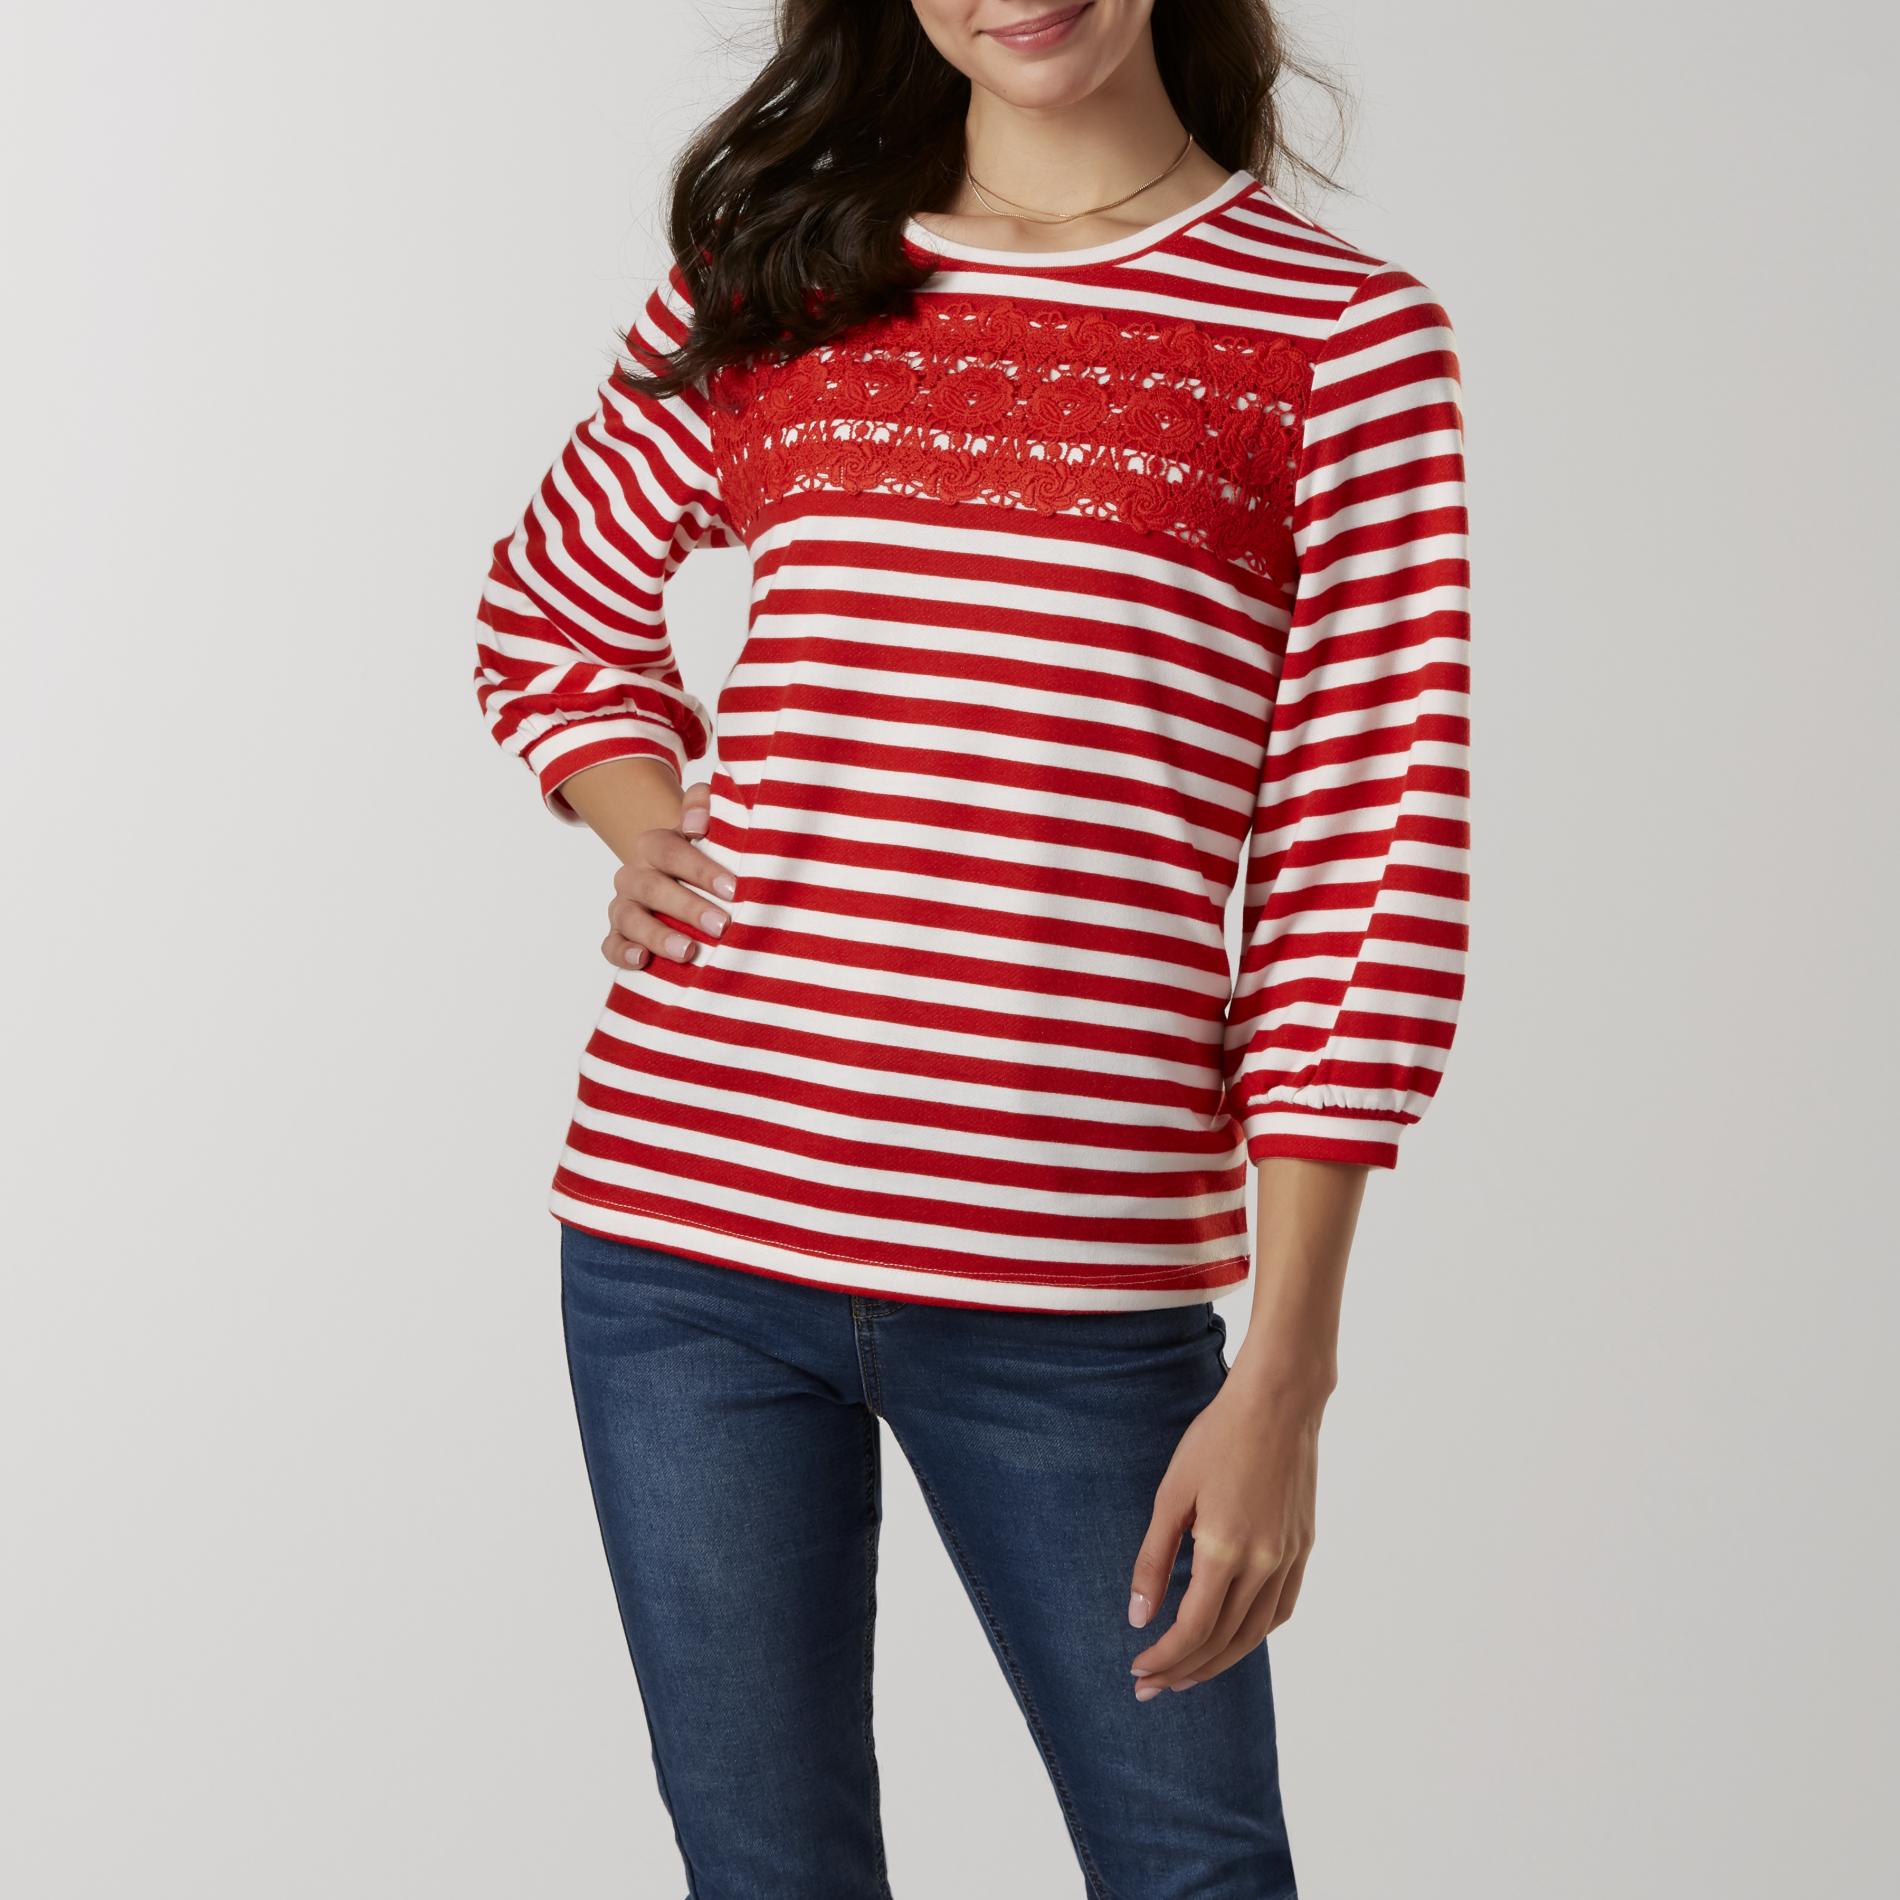 Basic Editions Women's Embellished Shirt - Striped